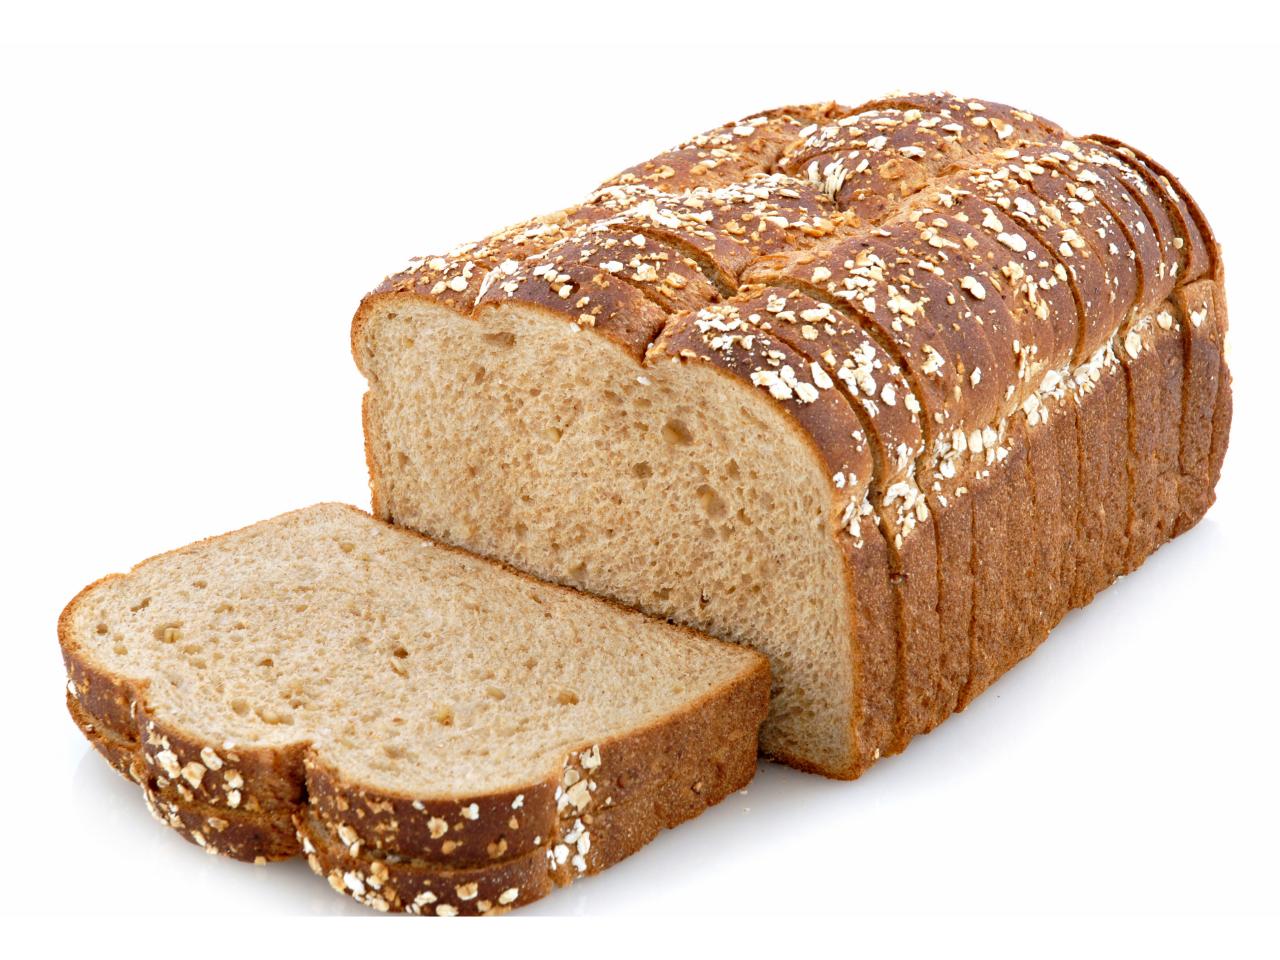 Sandwich Rolls - White, Wheat, Whole White Wheat, Multi-grain